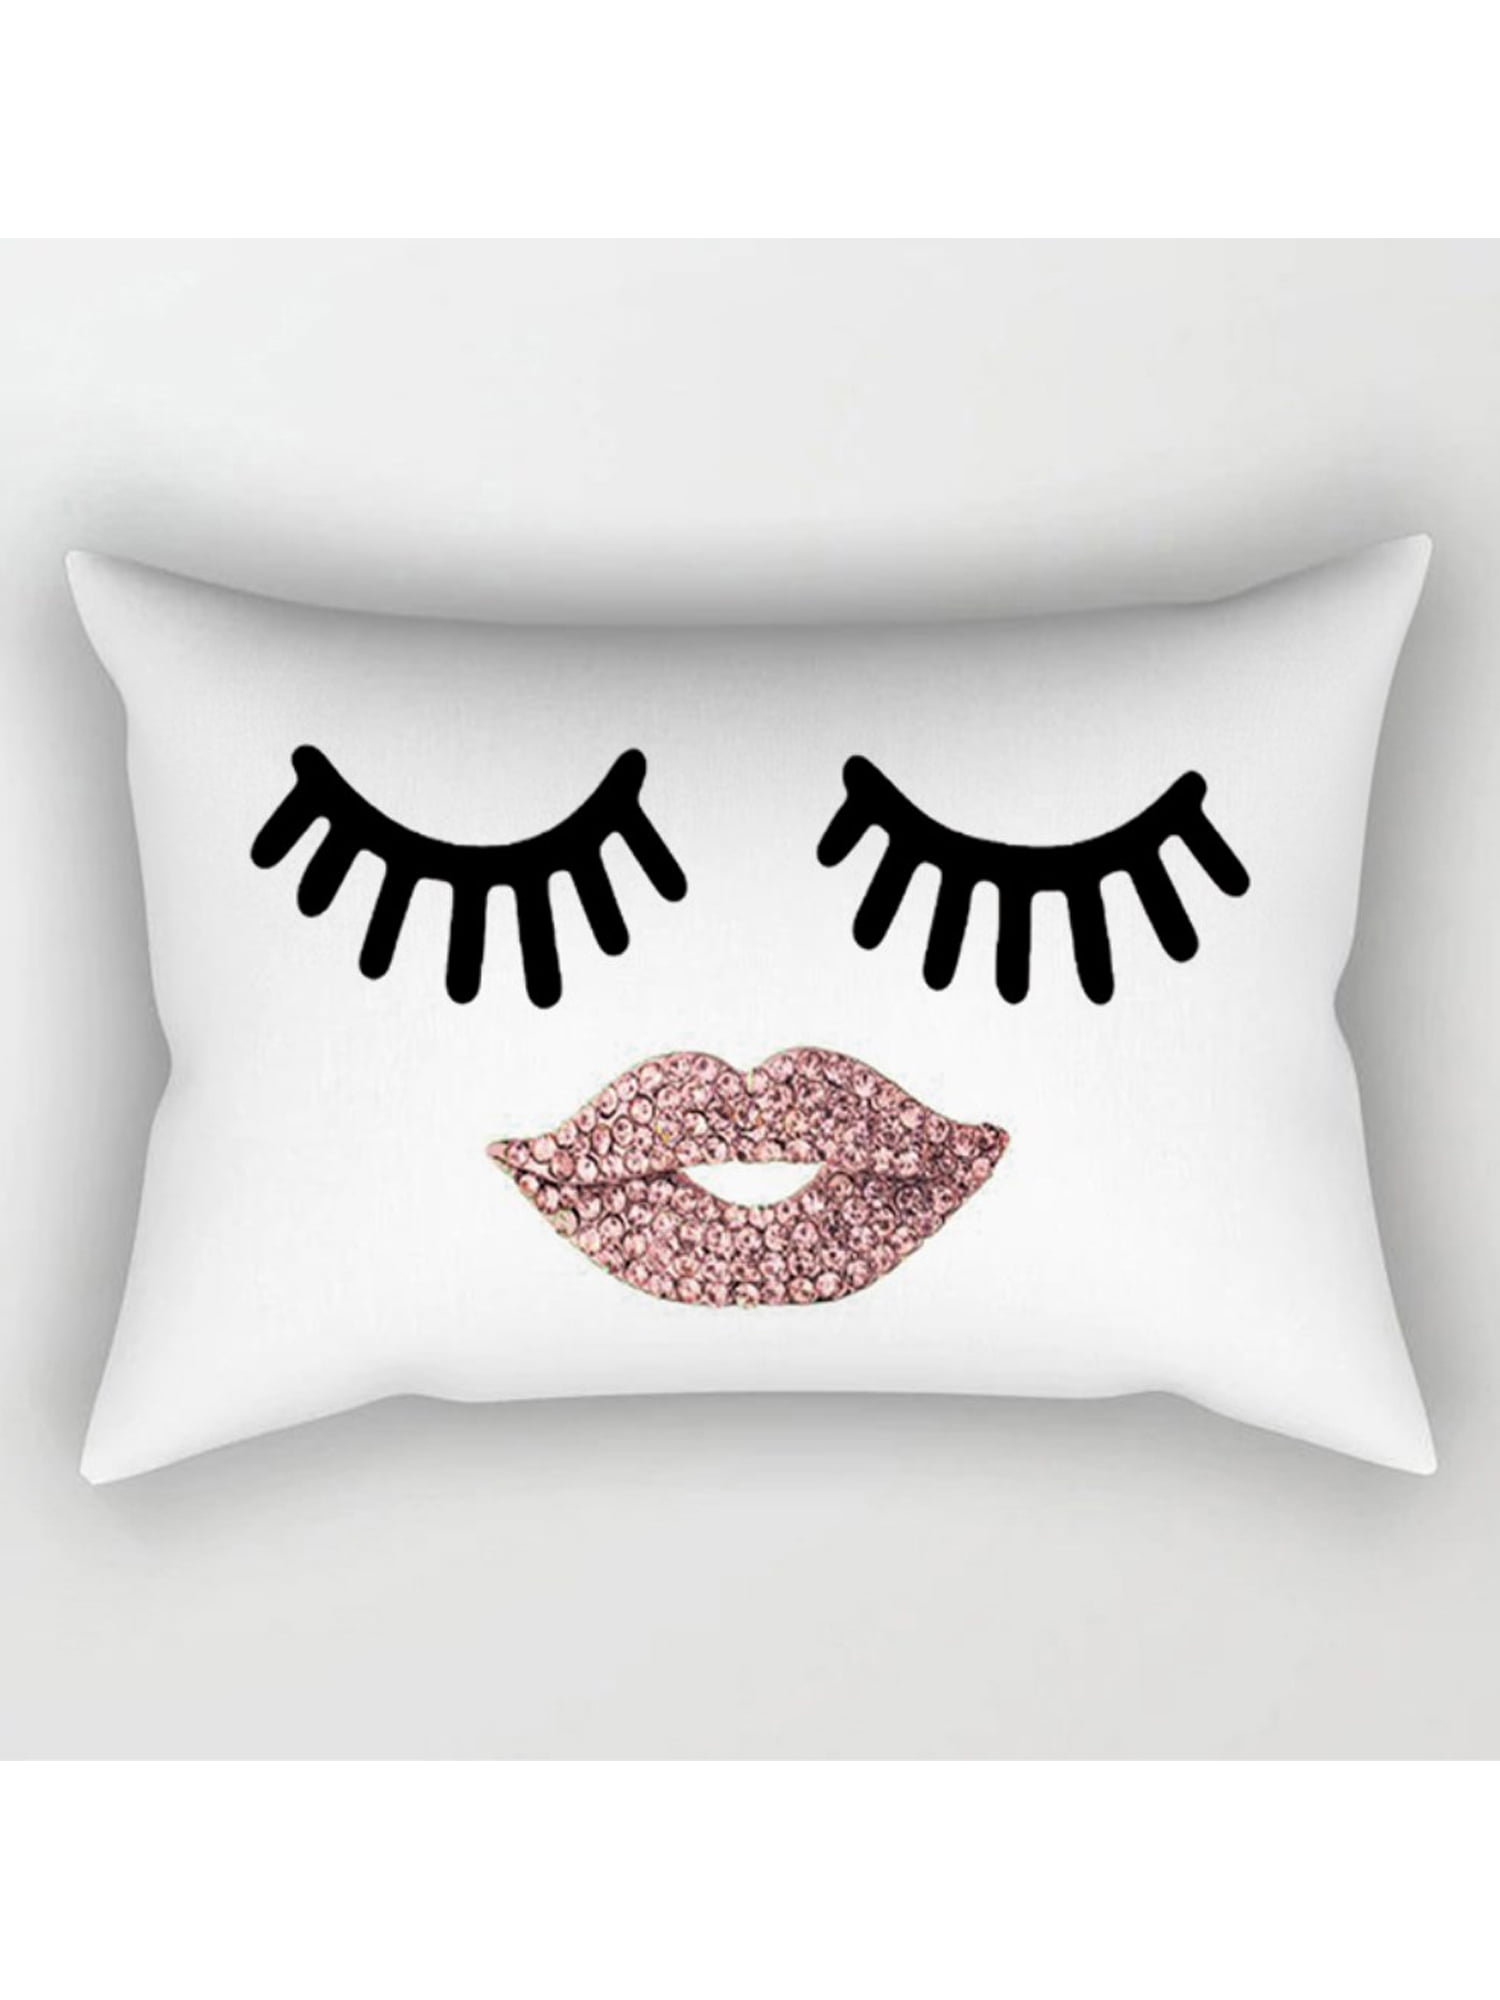 Bling Shimmer Eyelashes Pillowcase Lash Cushion Cover Car Sofa Office Home Decor 